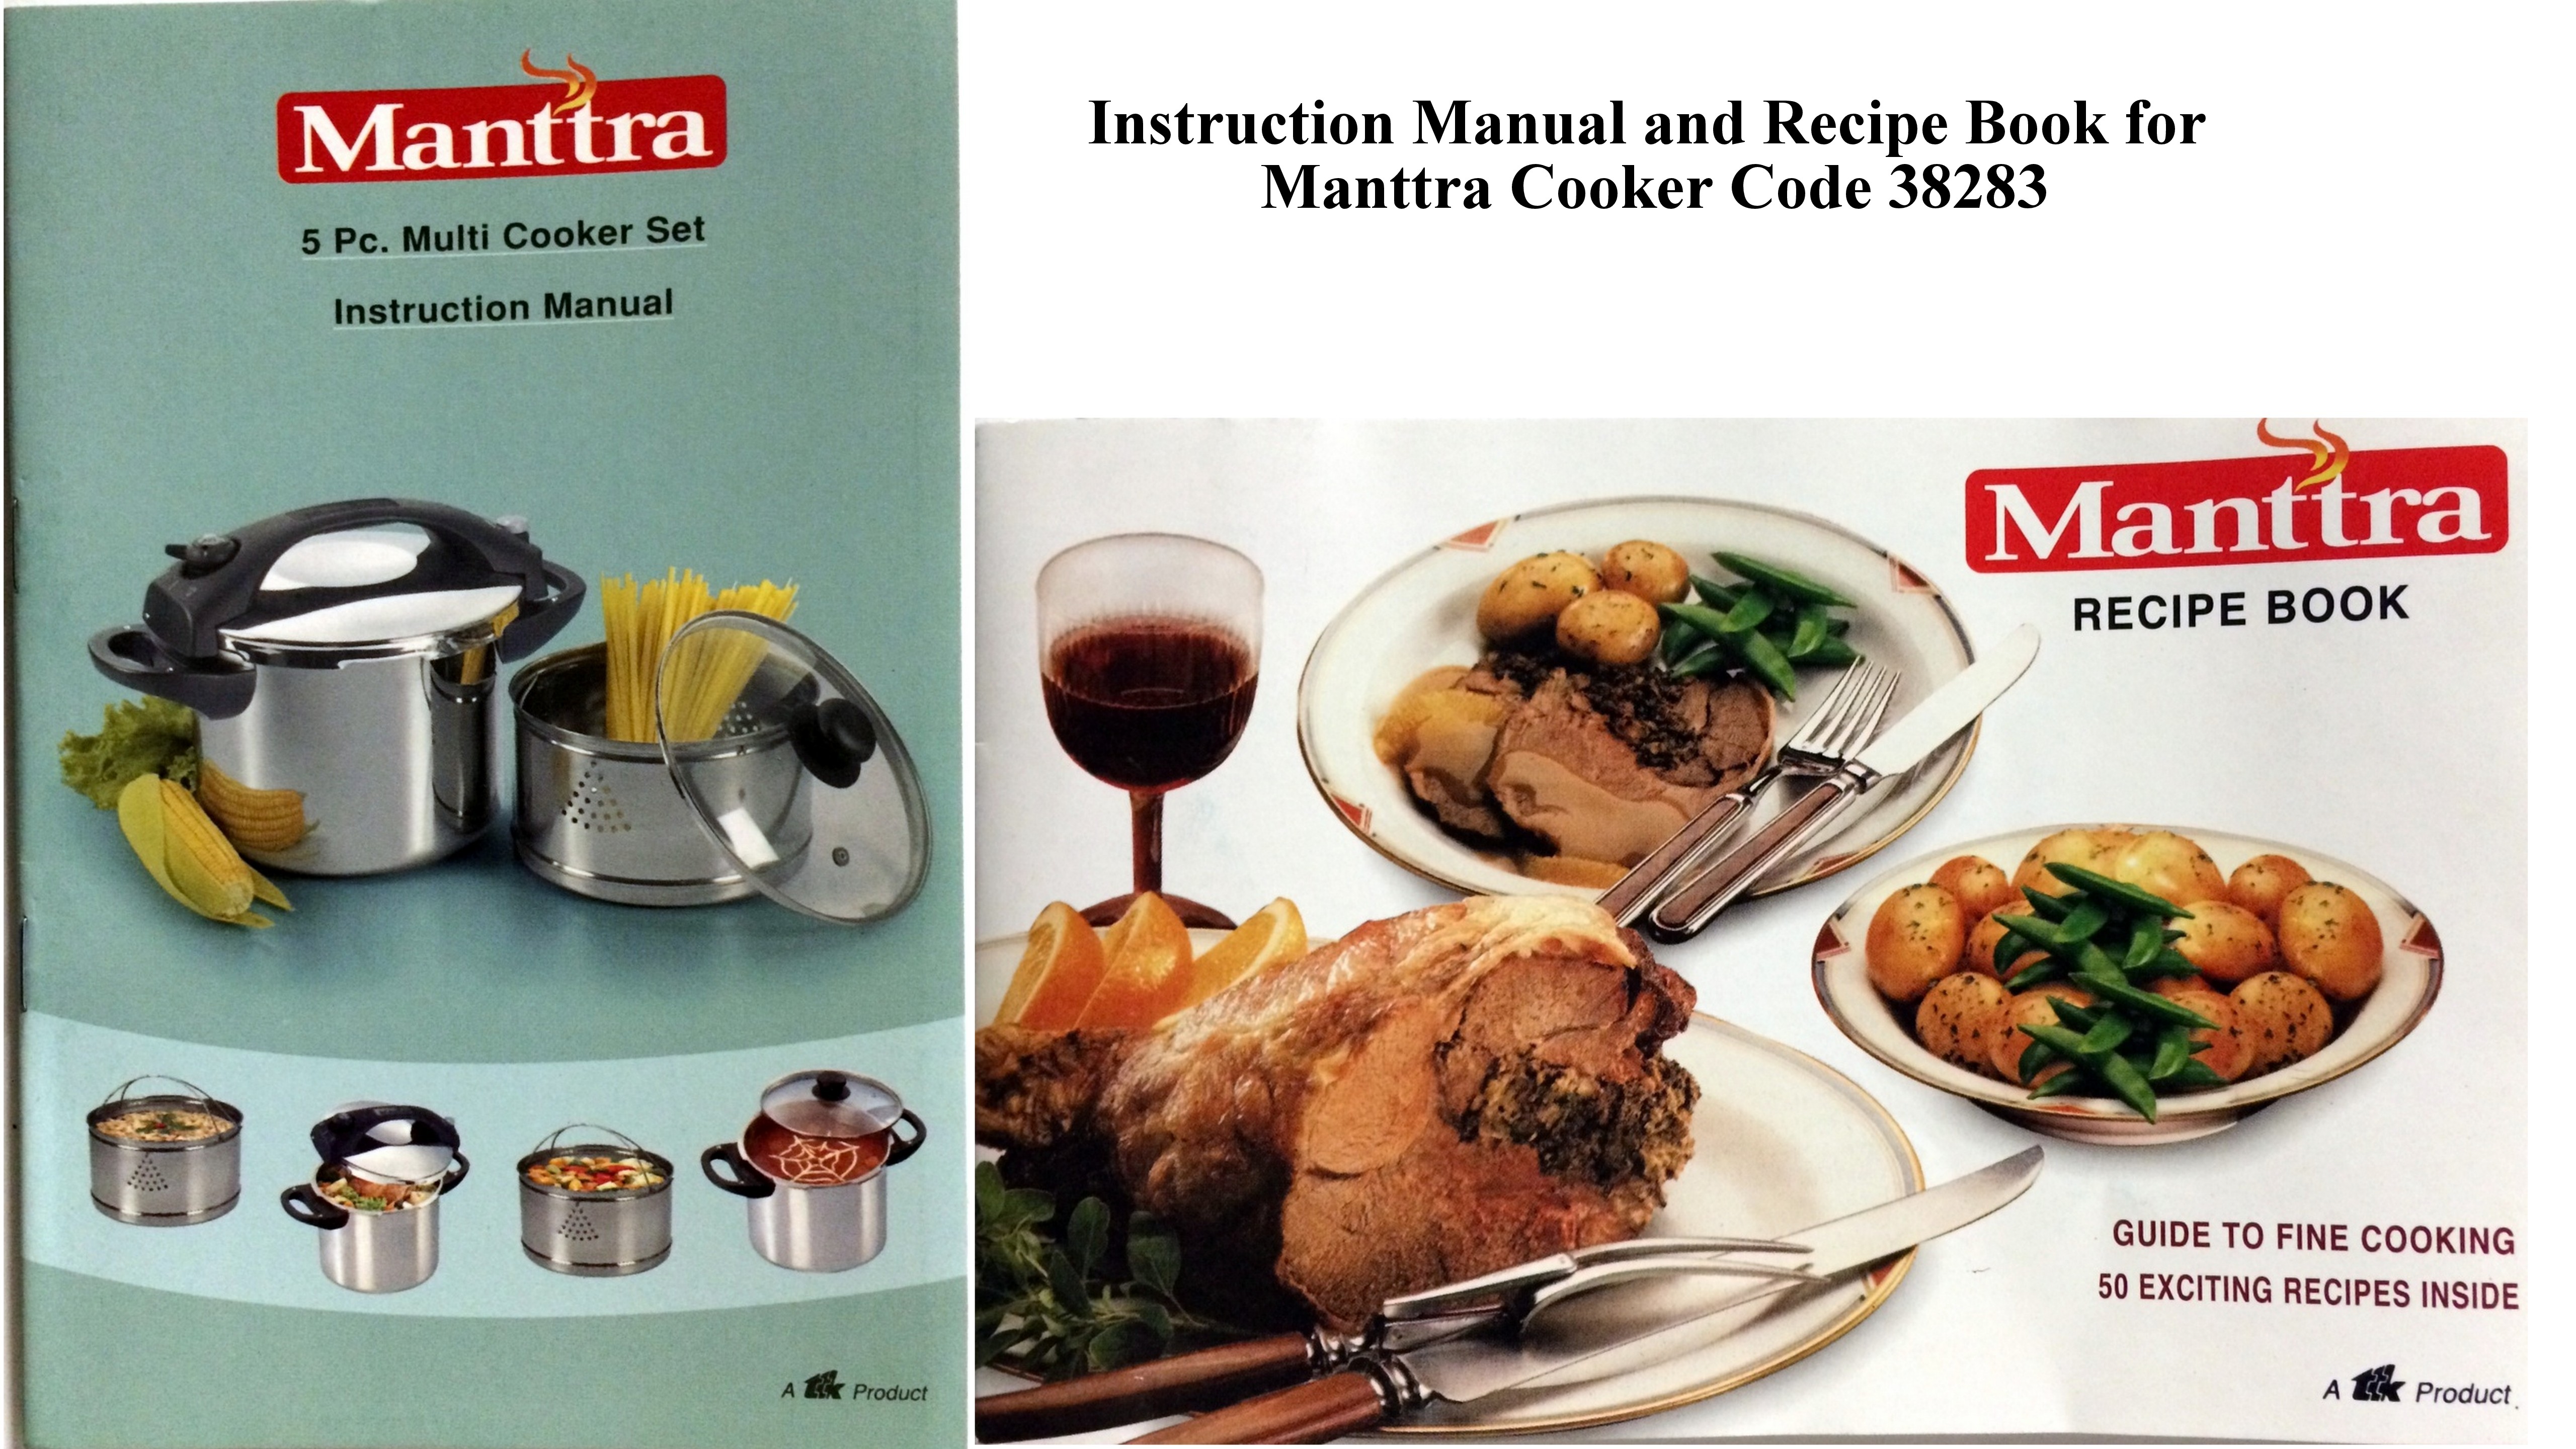 Manttra Instruction & Recipe Book 38283